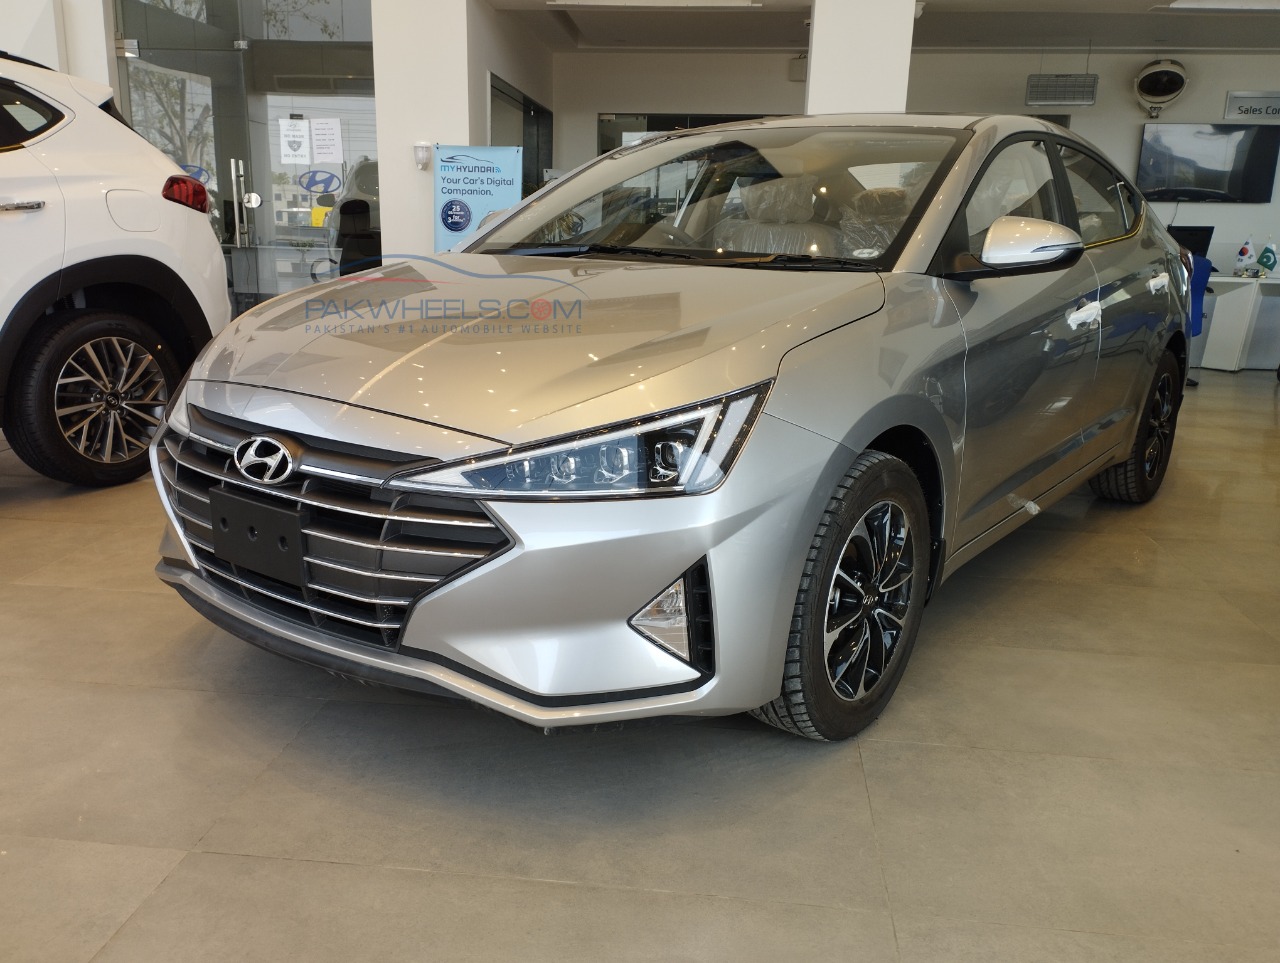 Hyundai car prices